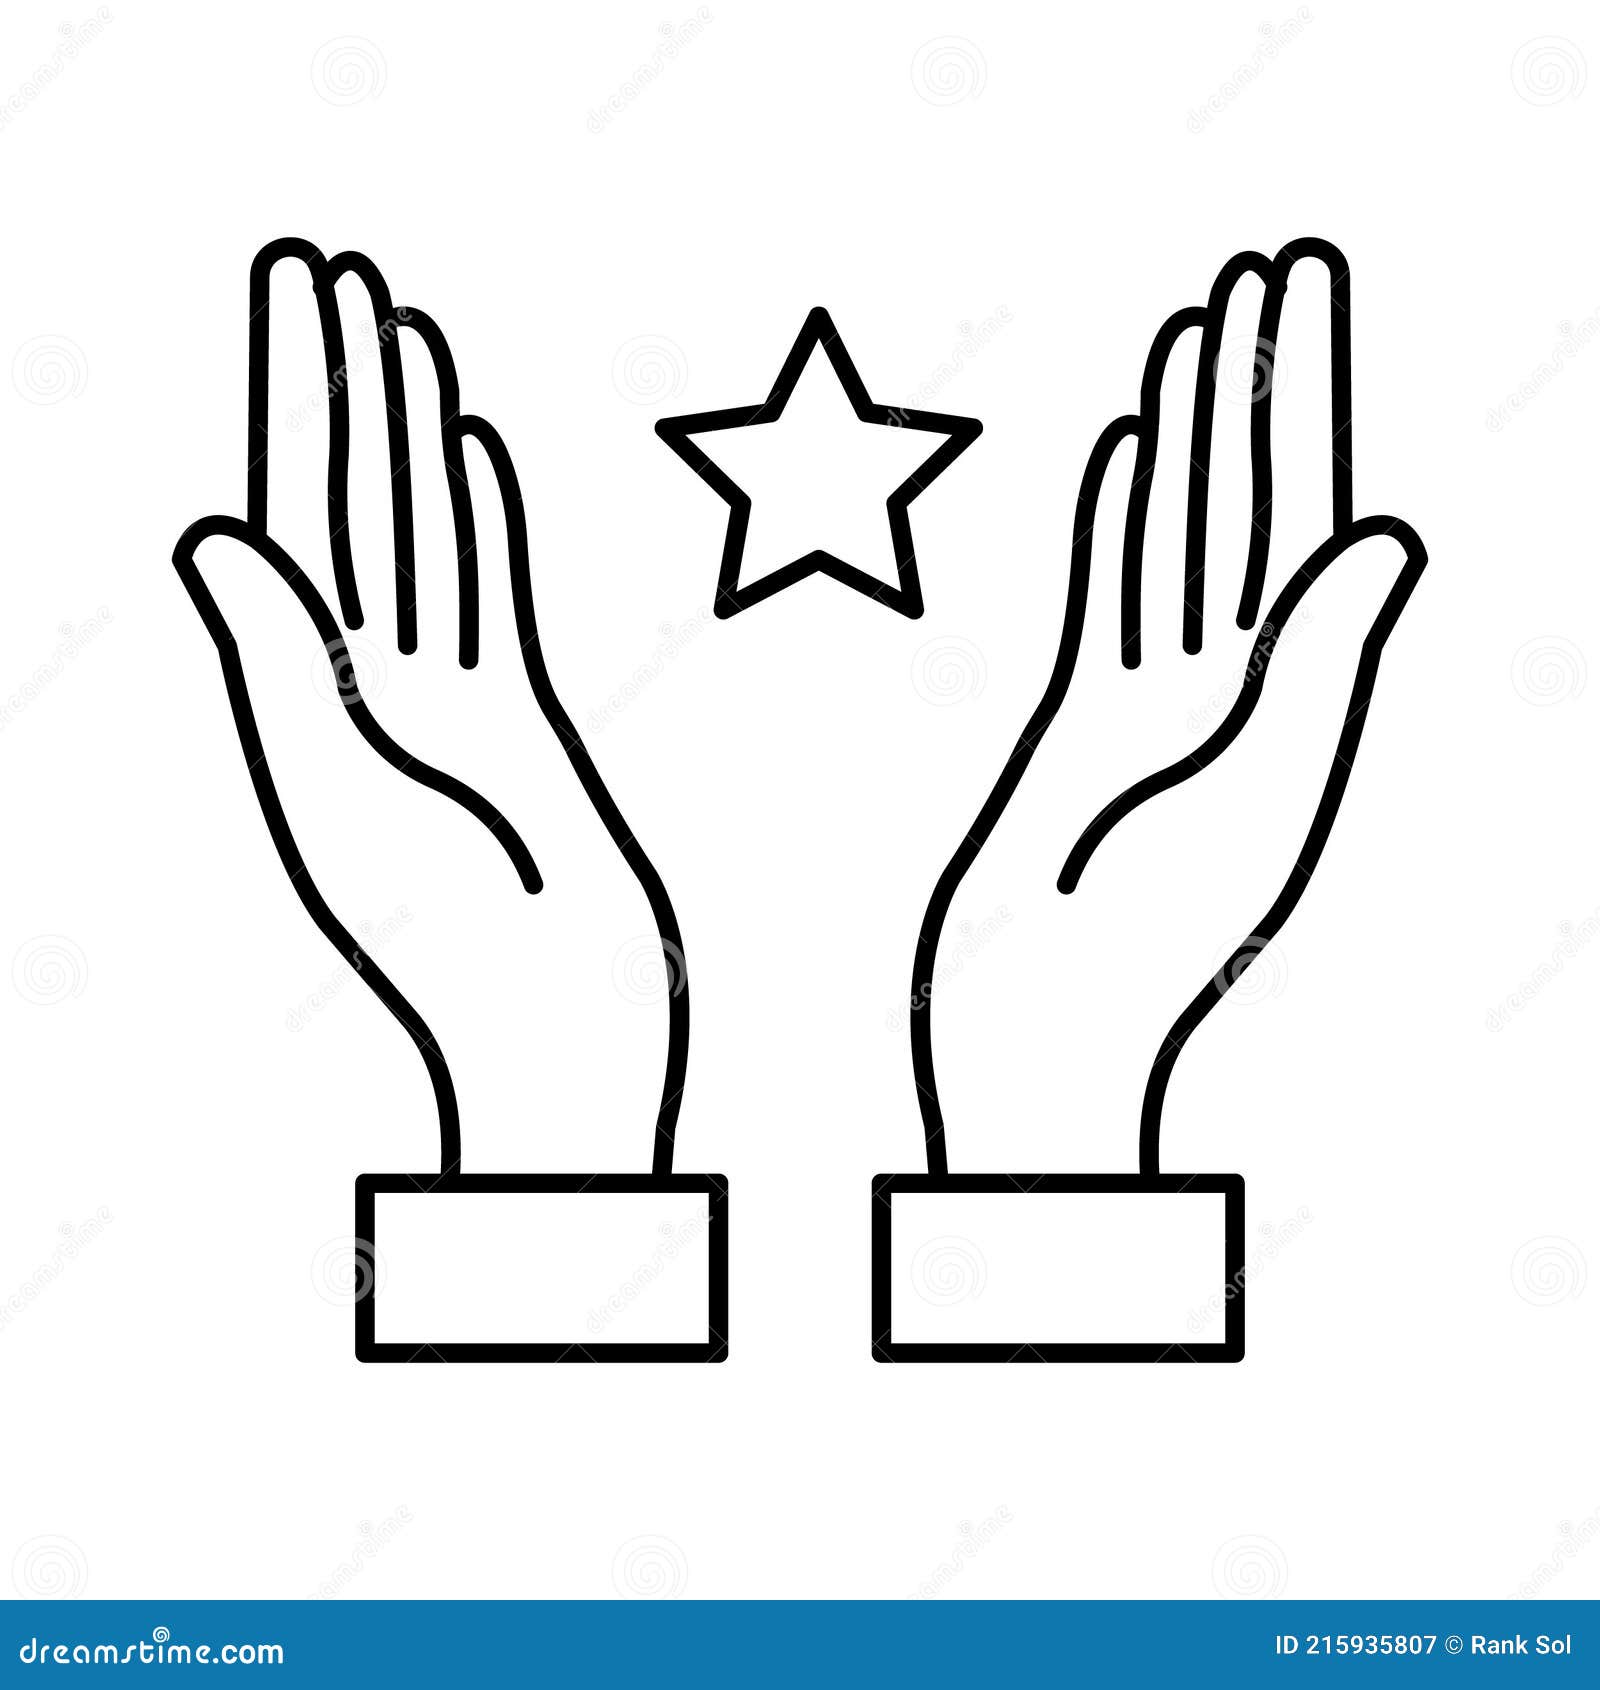 hand raiz pray   icon which can easily modify or edit